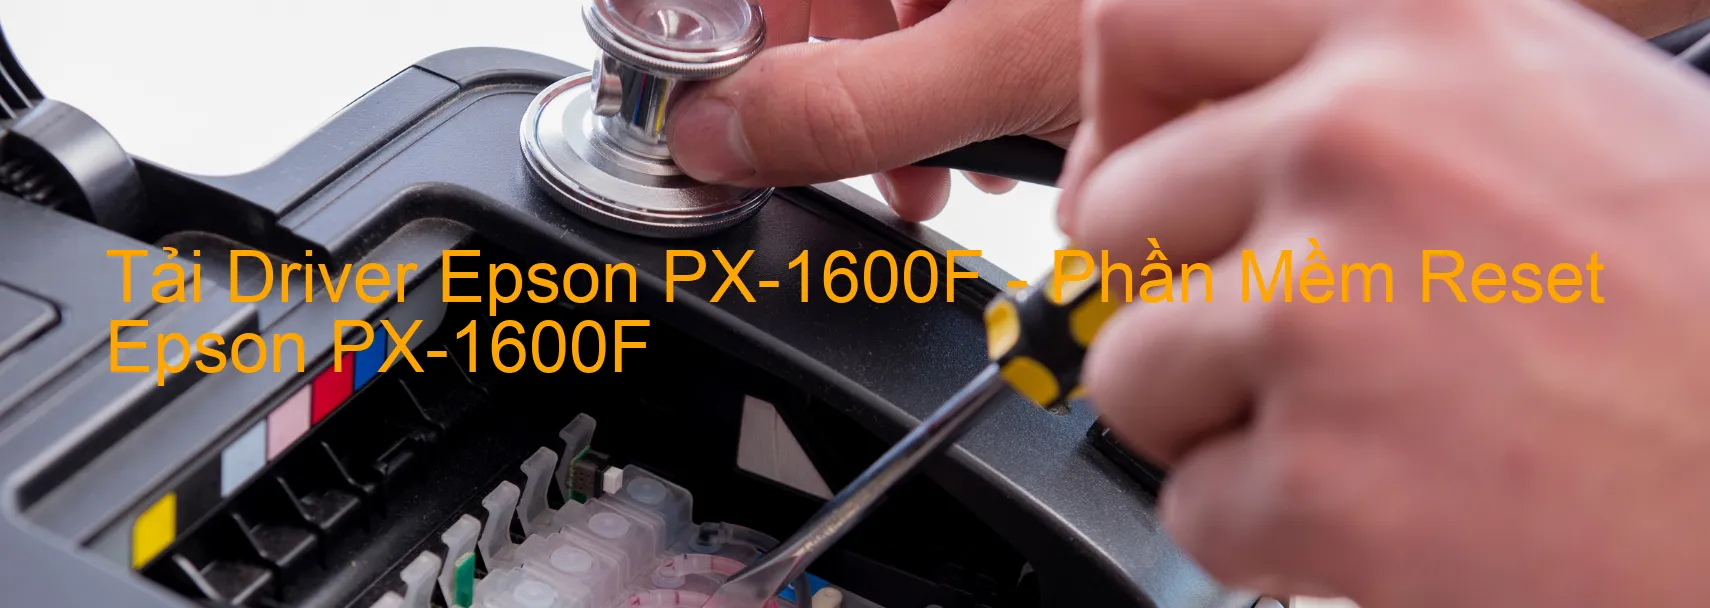 Driver Epson PX-1600F, Phần Mềm Reset Epson PX-1600F